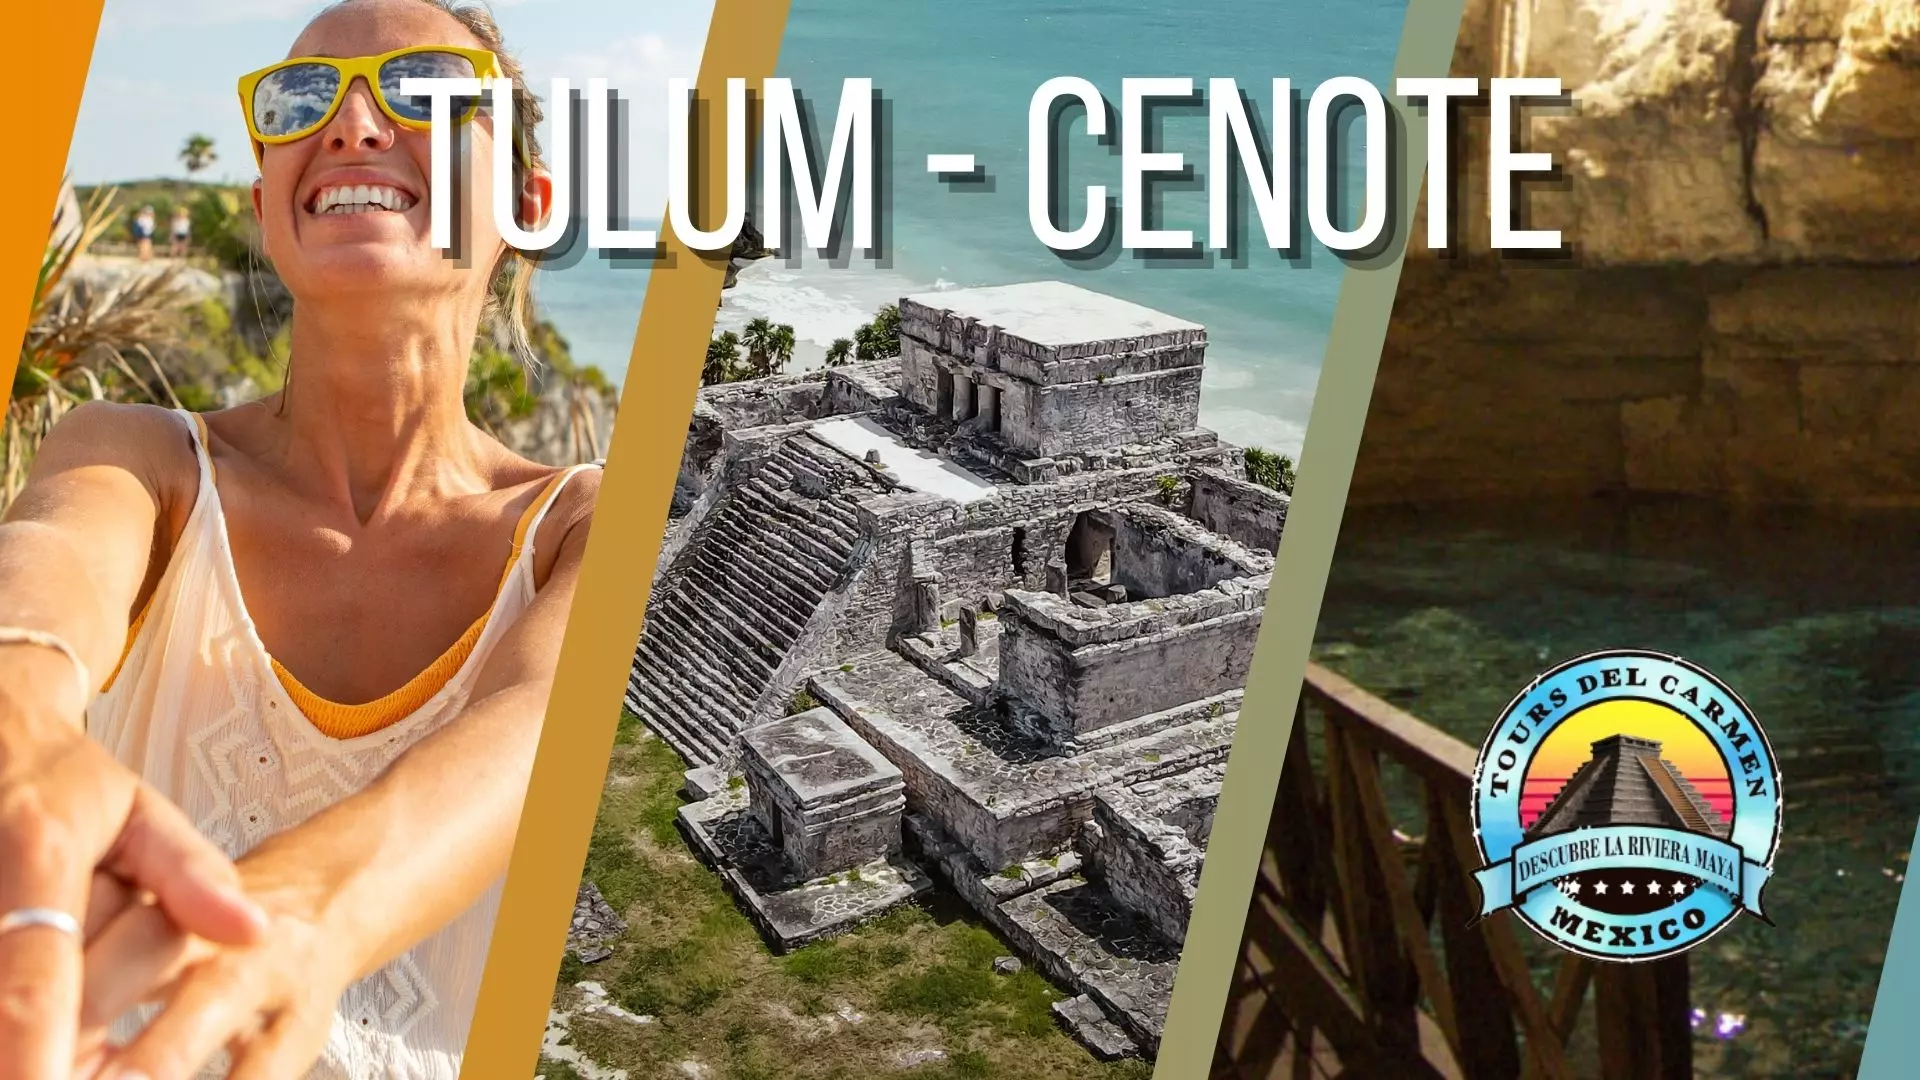 Tulum-Cenote / Tours en Playa del Carmen